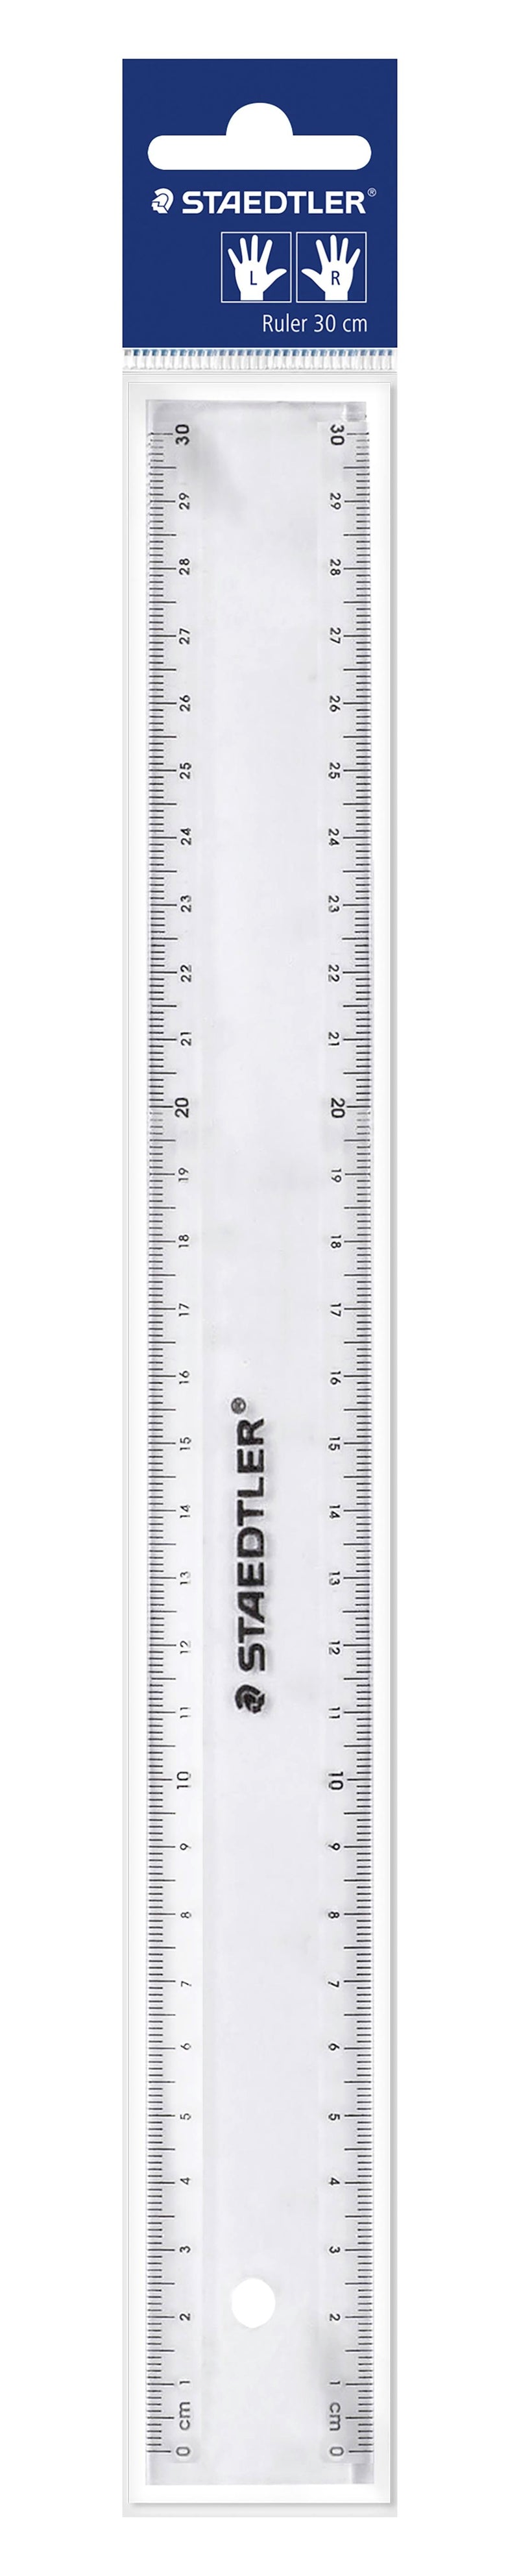 Ruler transparent 30cm